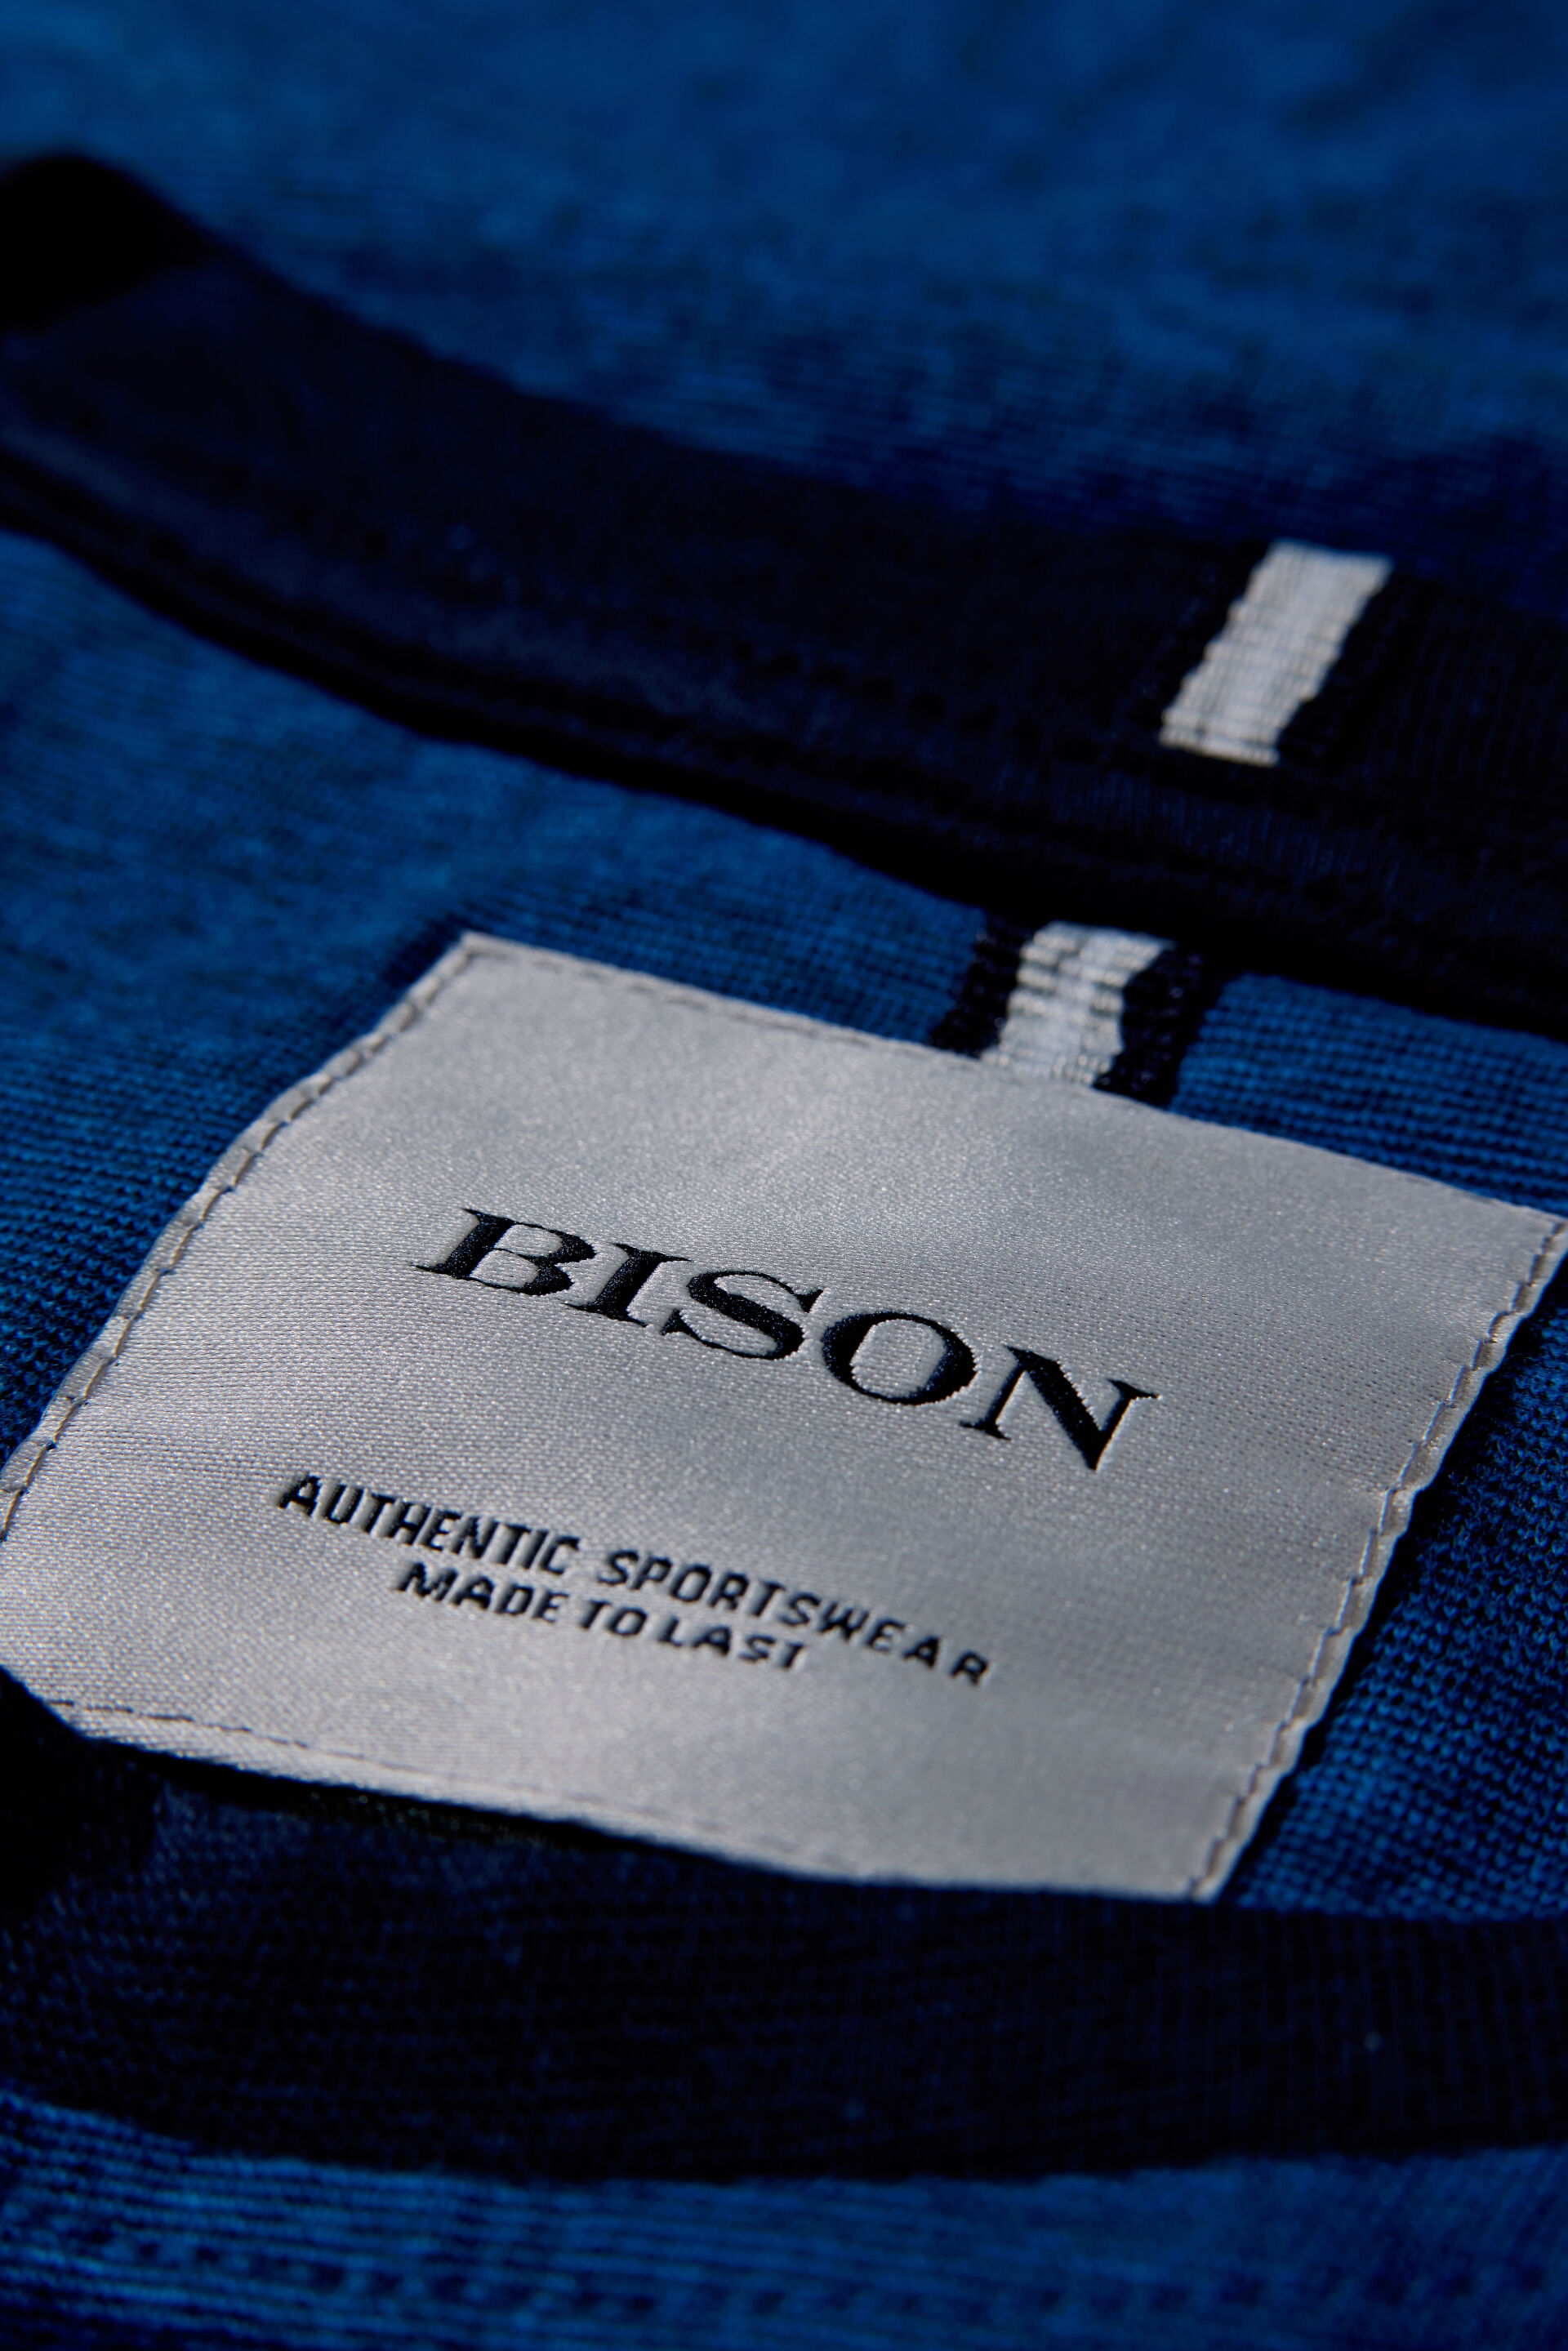 Bison  T-shirt 80-400082PLUS